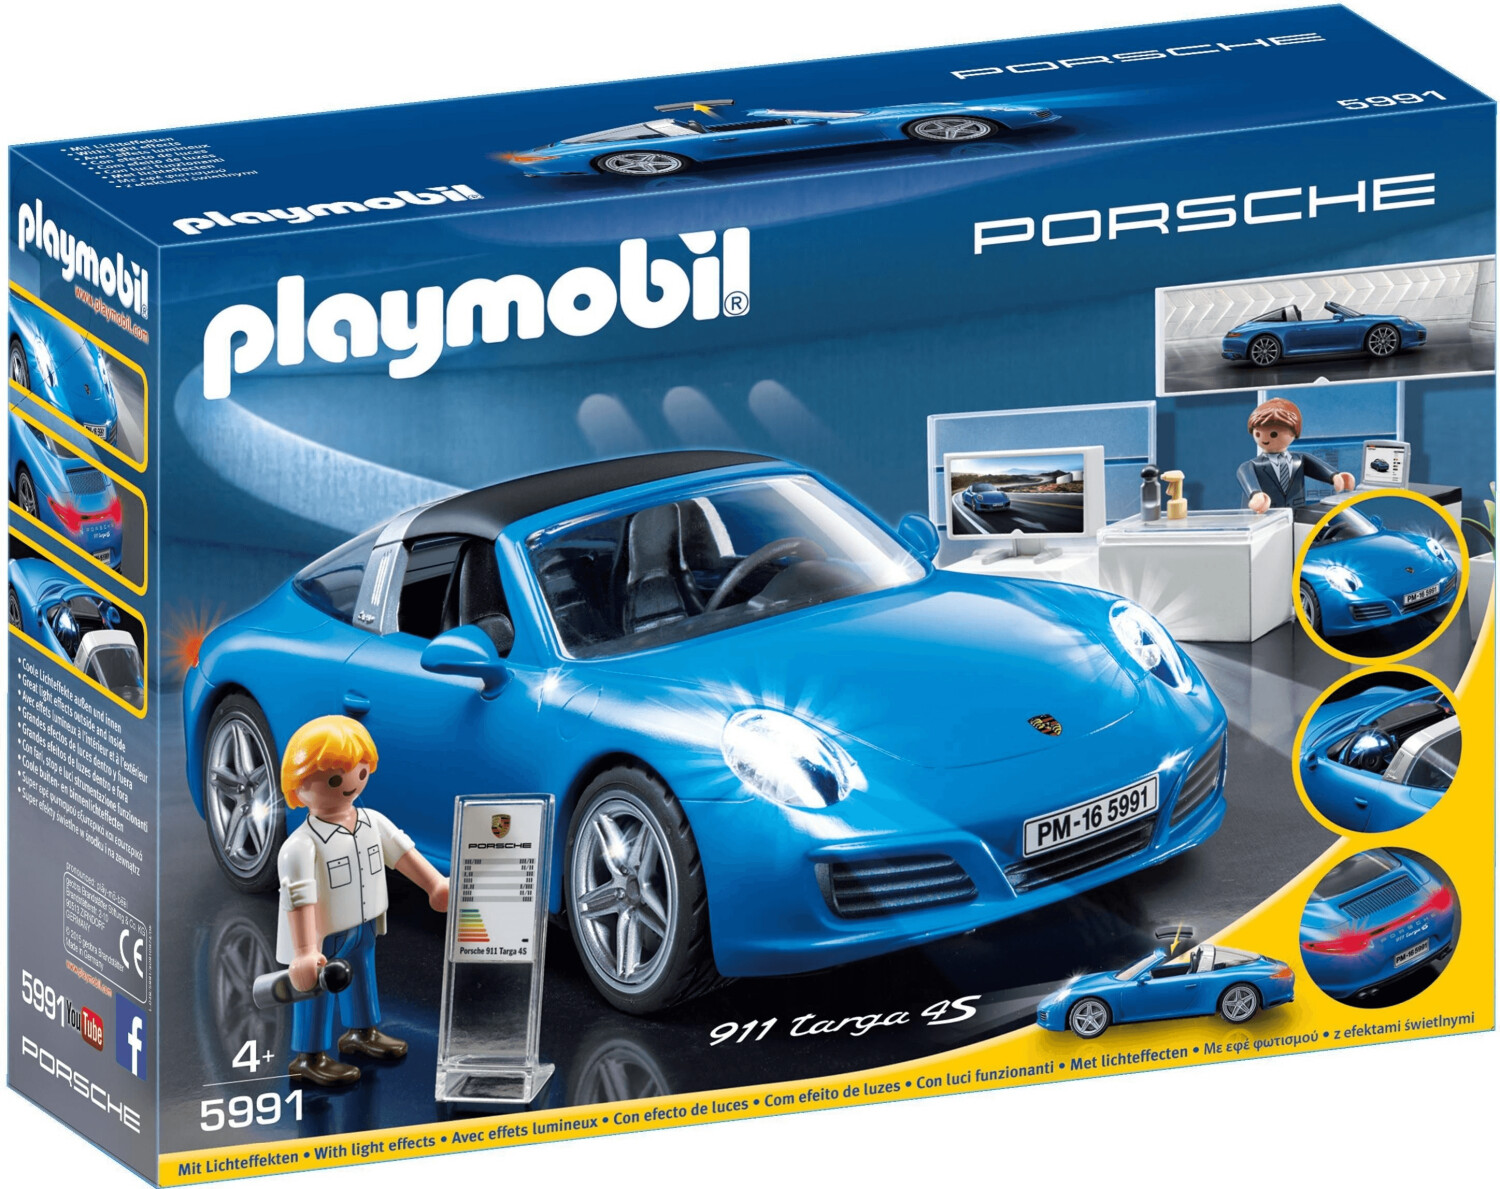 Playmobil Porsche 911 Targa 4S (5991) ab € 82,00